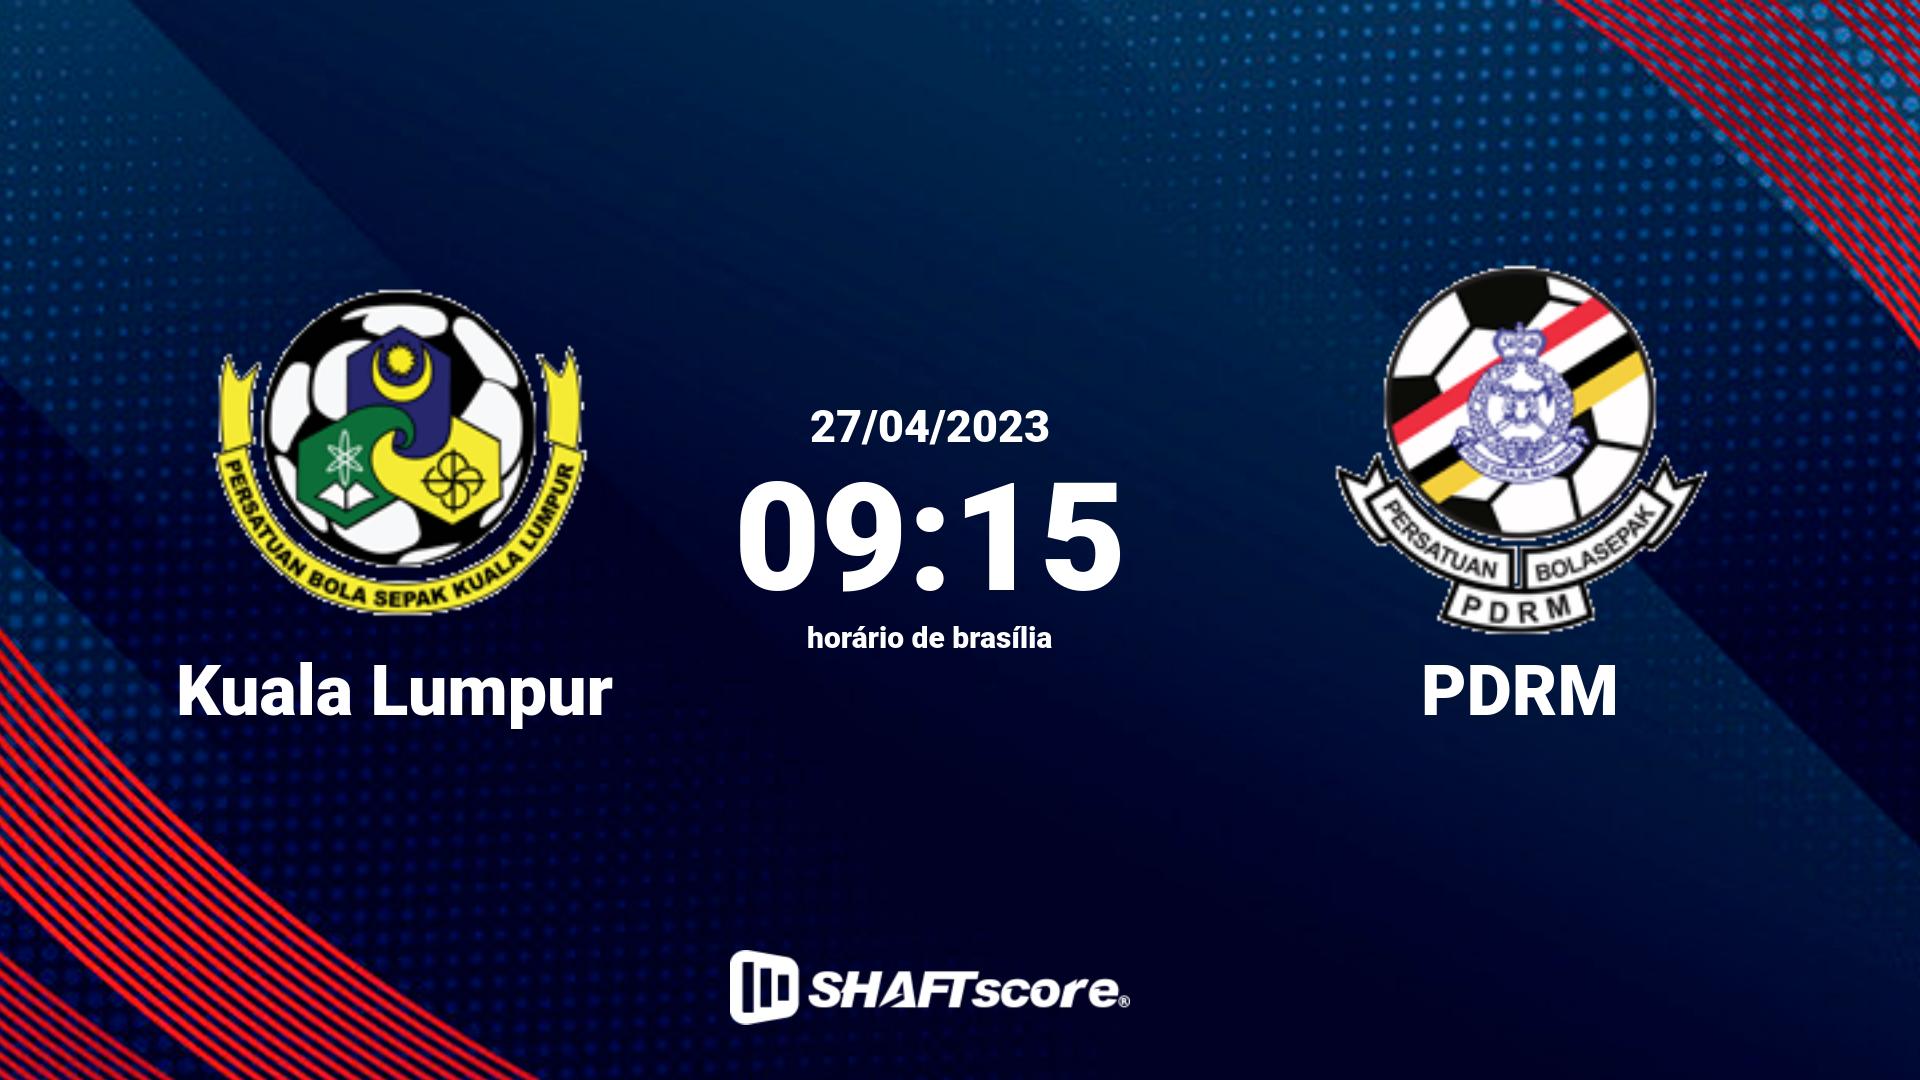 Estatísticas do jogo Kuala Lumpur vs PDRM 27.04 09:15